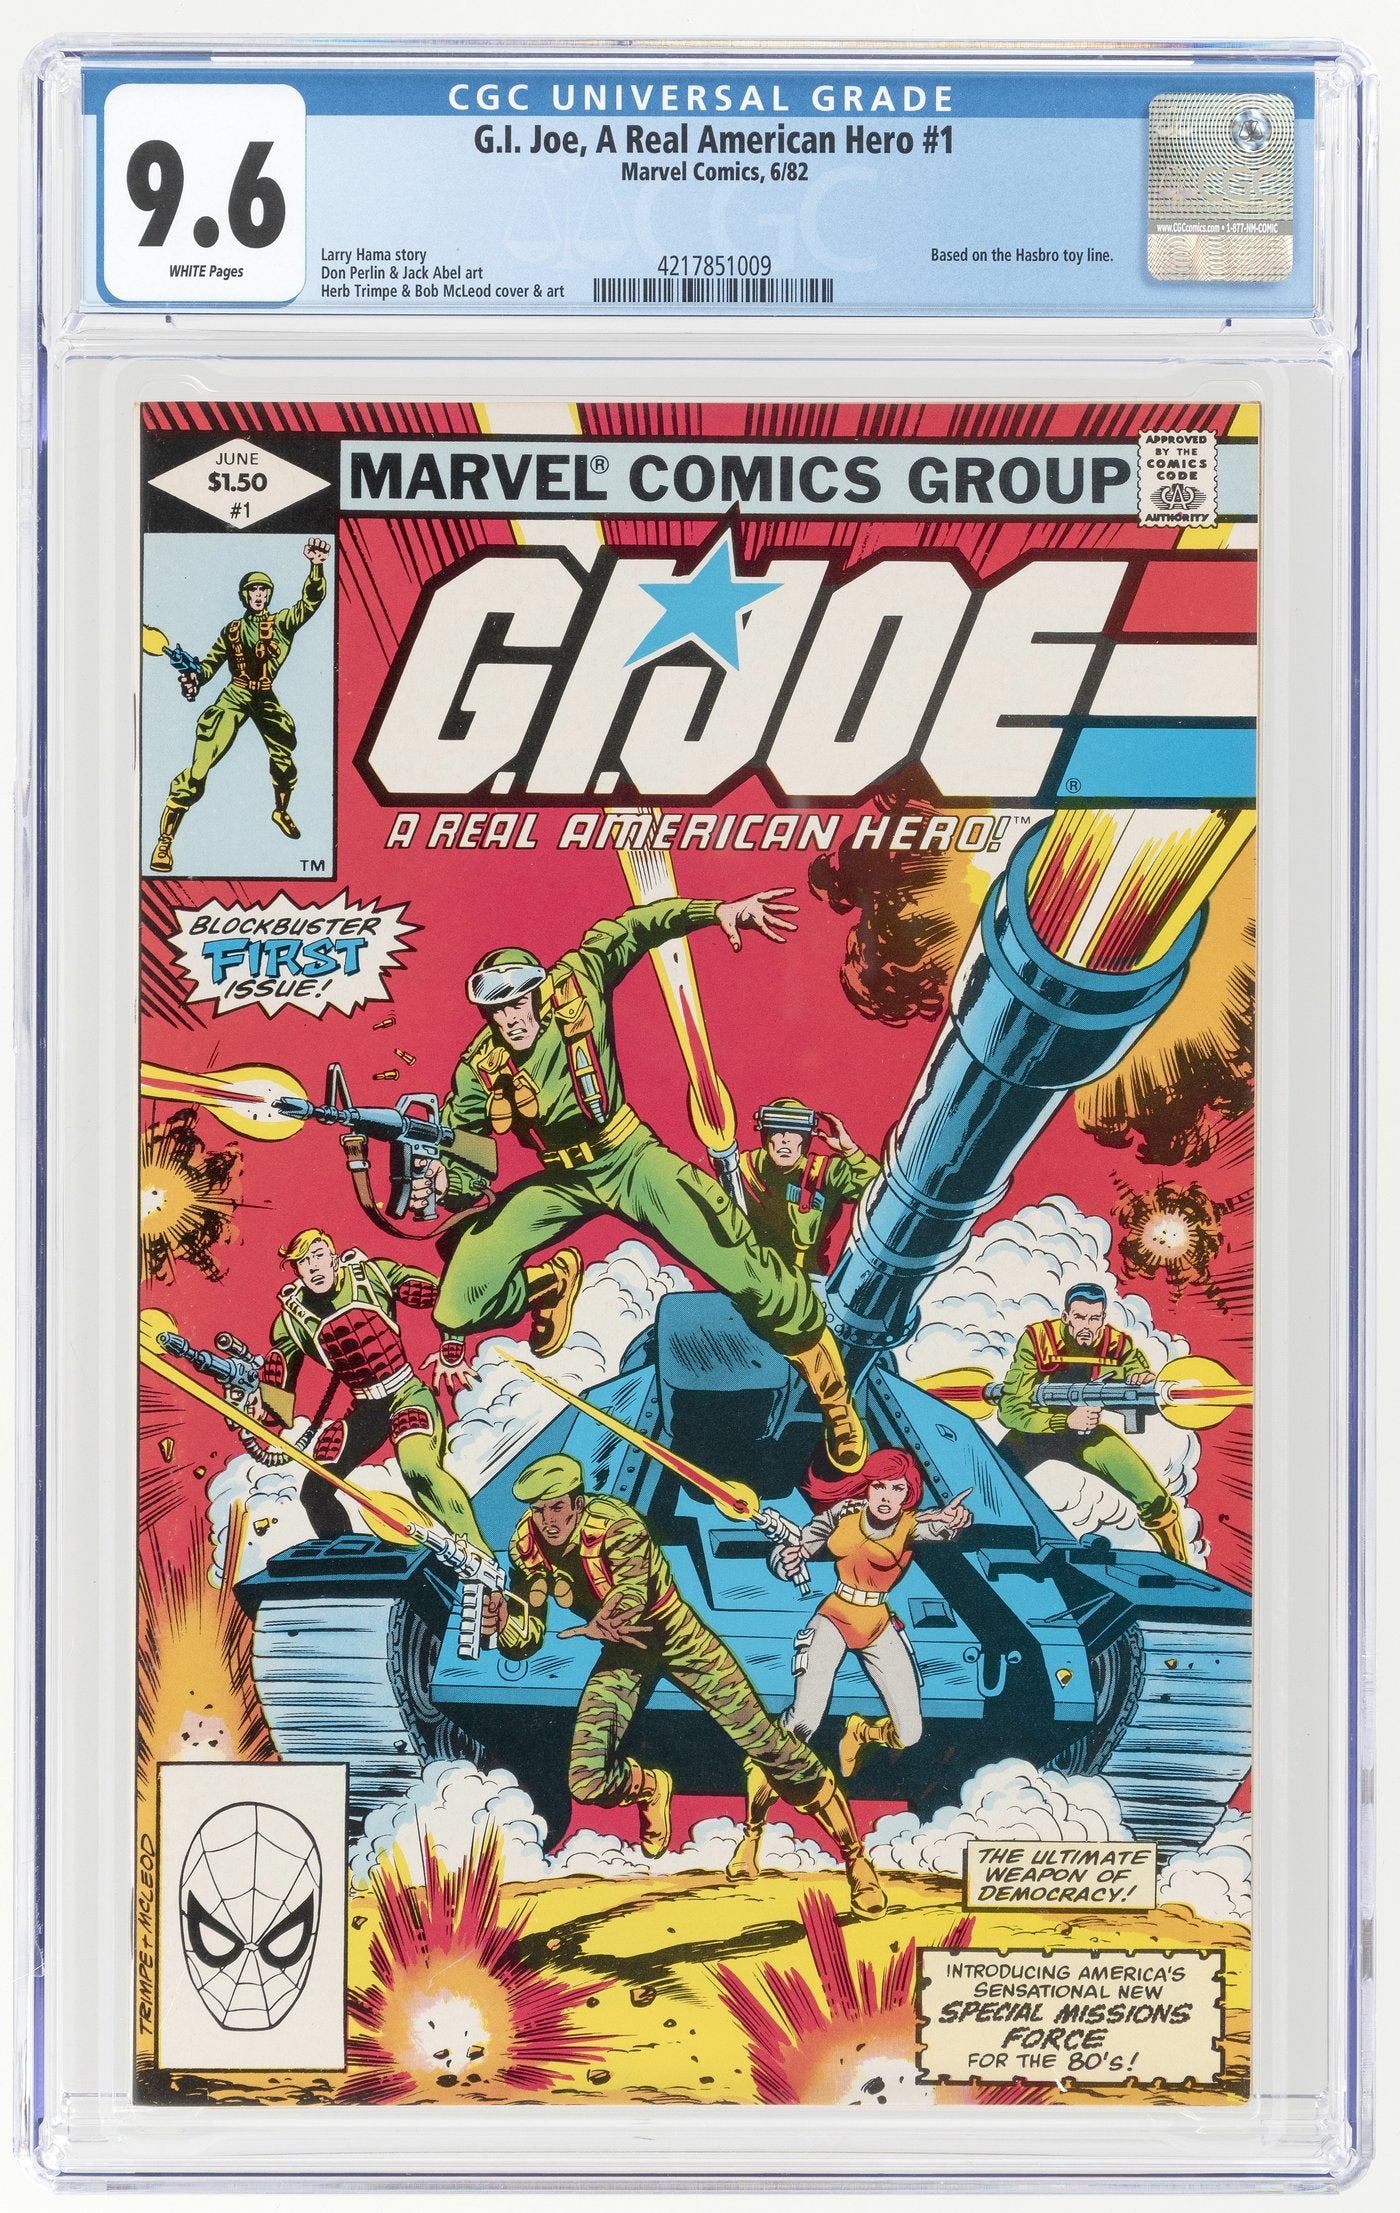 G.I. JOE, A REAL AMERICAN HERO #1 JUNE 1982 CGC 9.6 NM+